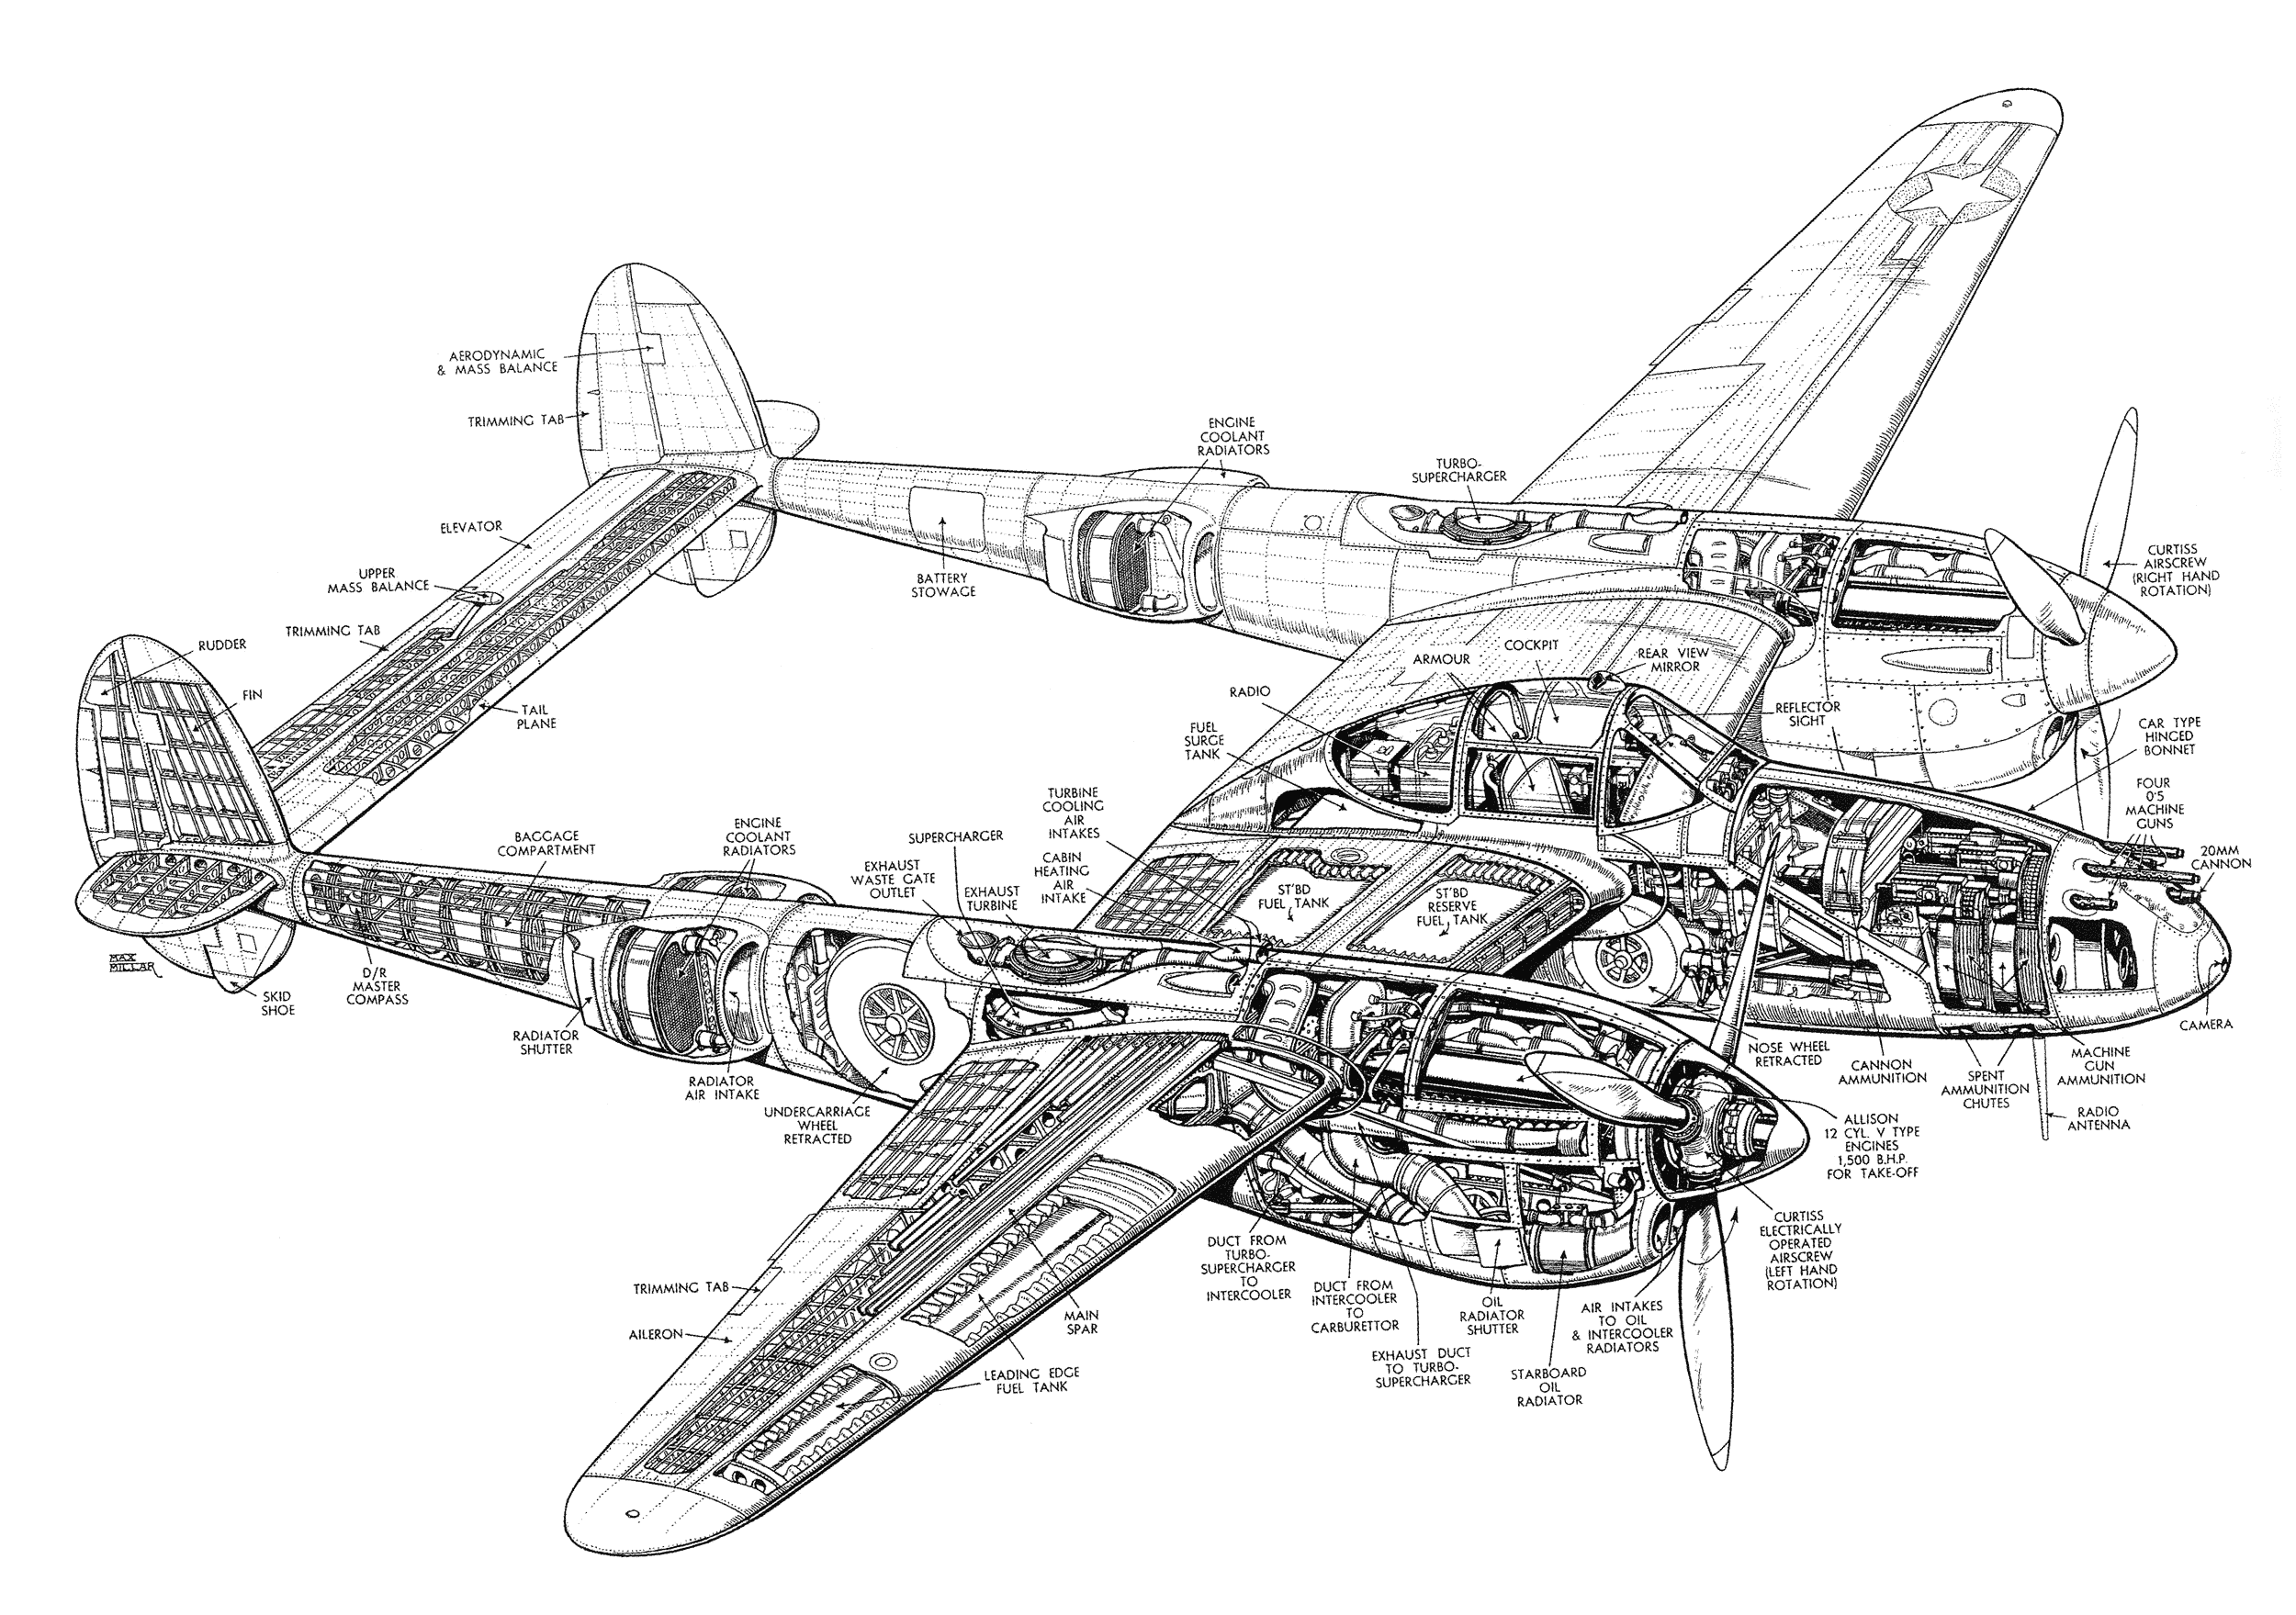 Lockheed P-38 Lightning cutaway